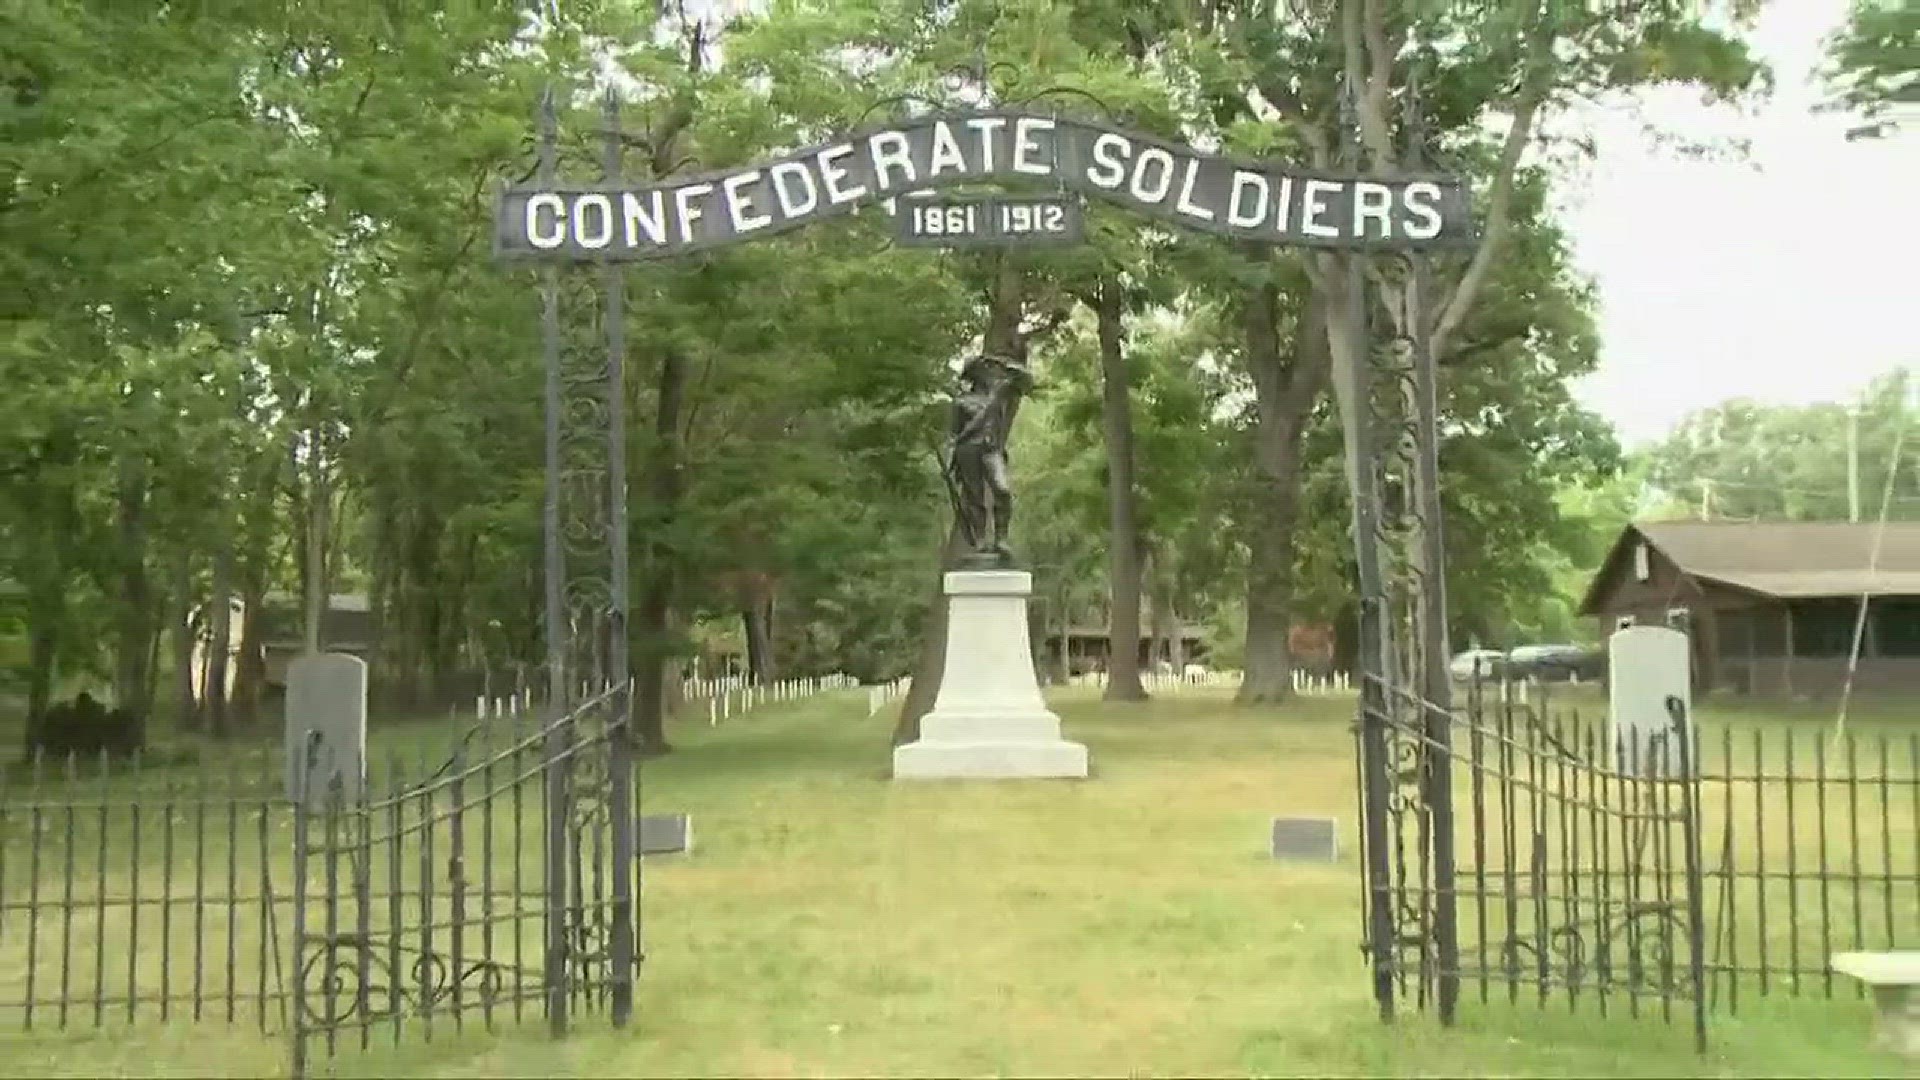 Confederate statue located NE Ohio